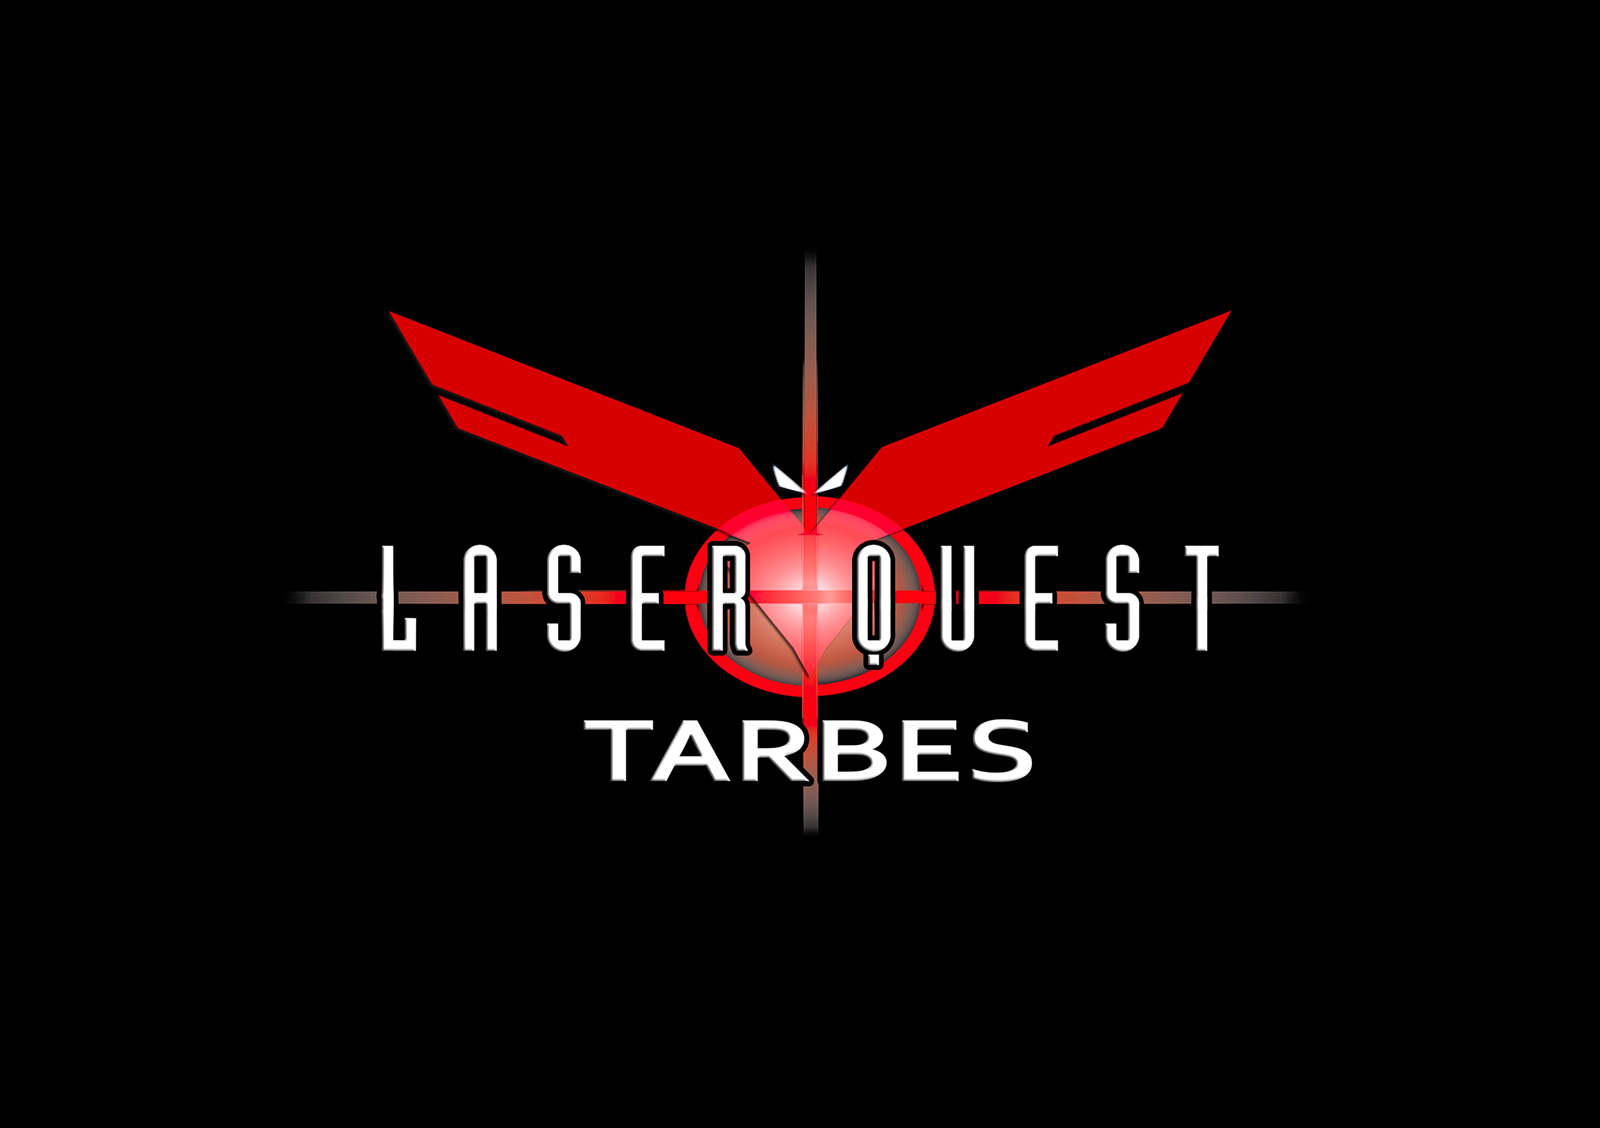 laser-quest-tarbes-23-06